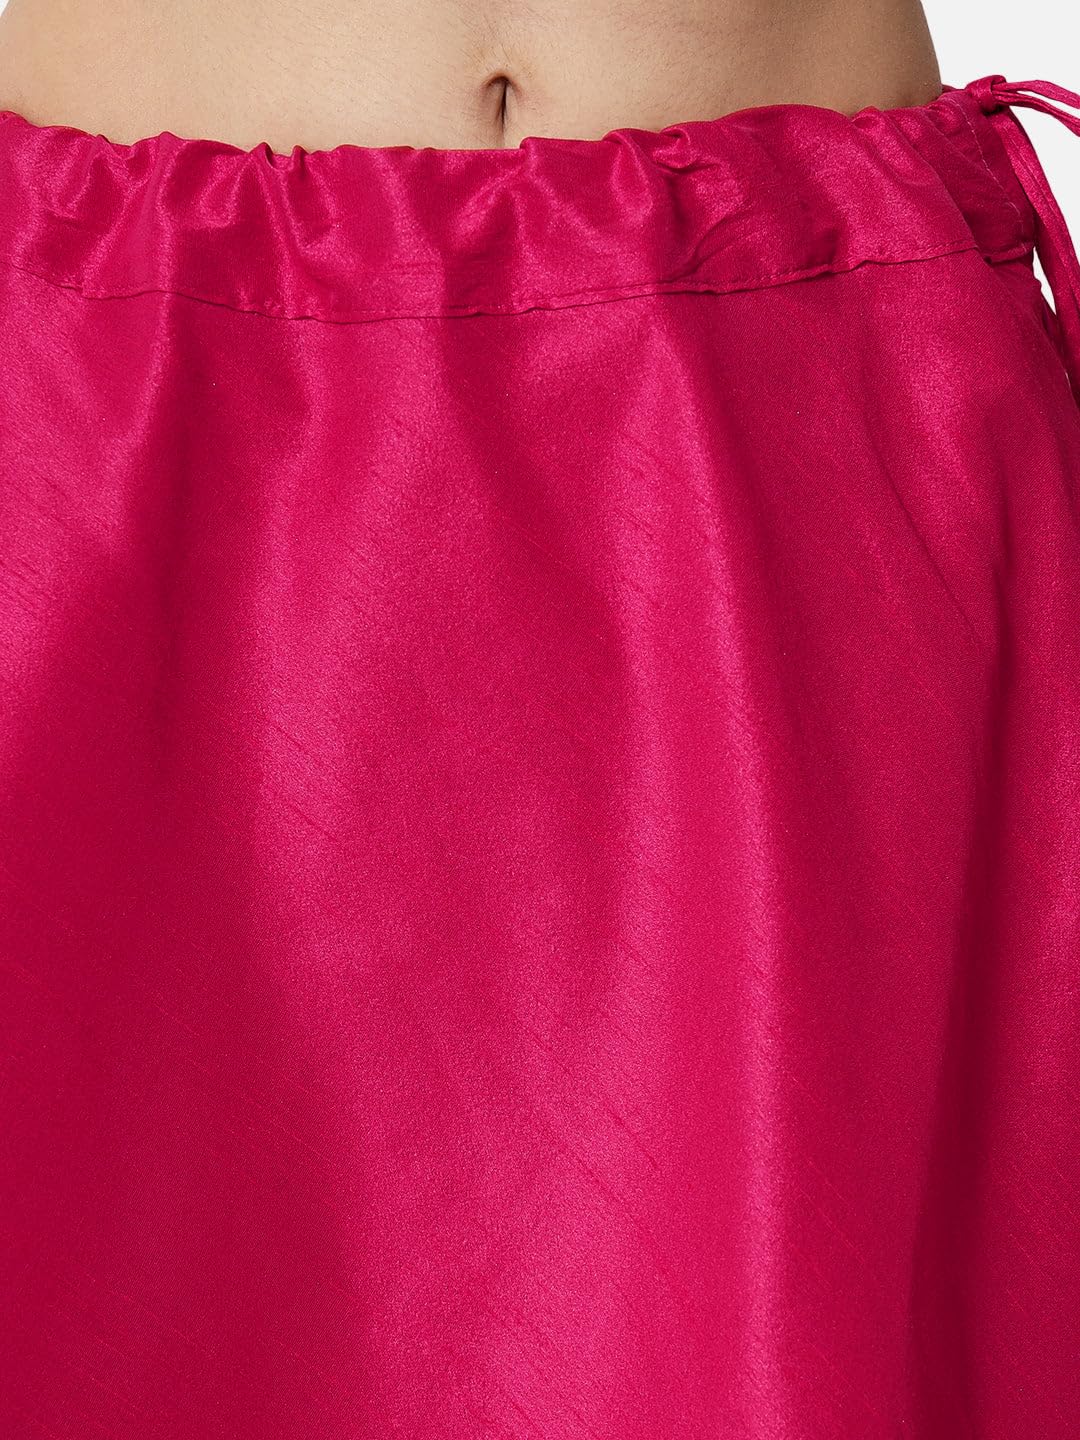 studio rasa Women's Dupion Hand Block Printed Bias Skirt for Wedding Festive (Pink)